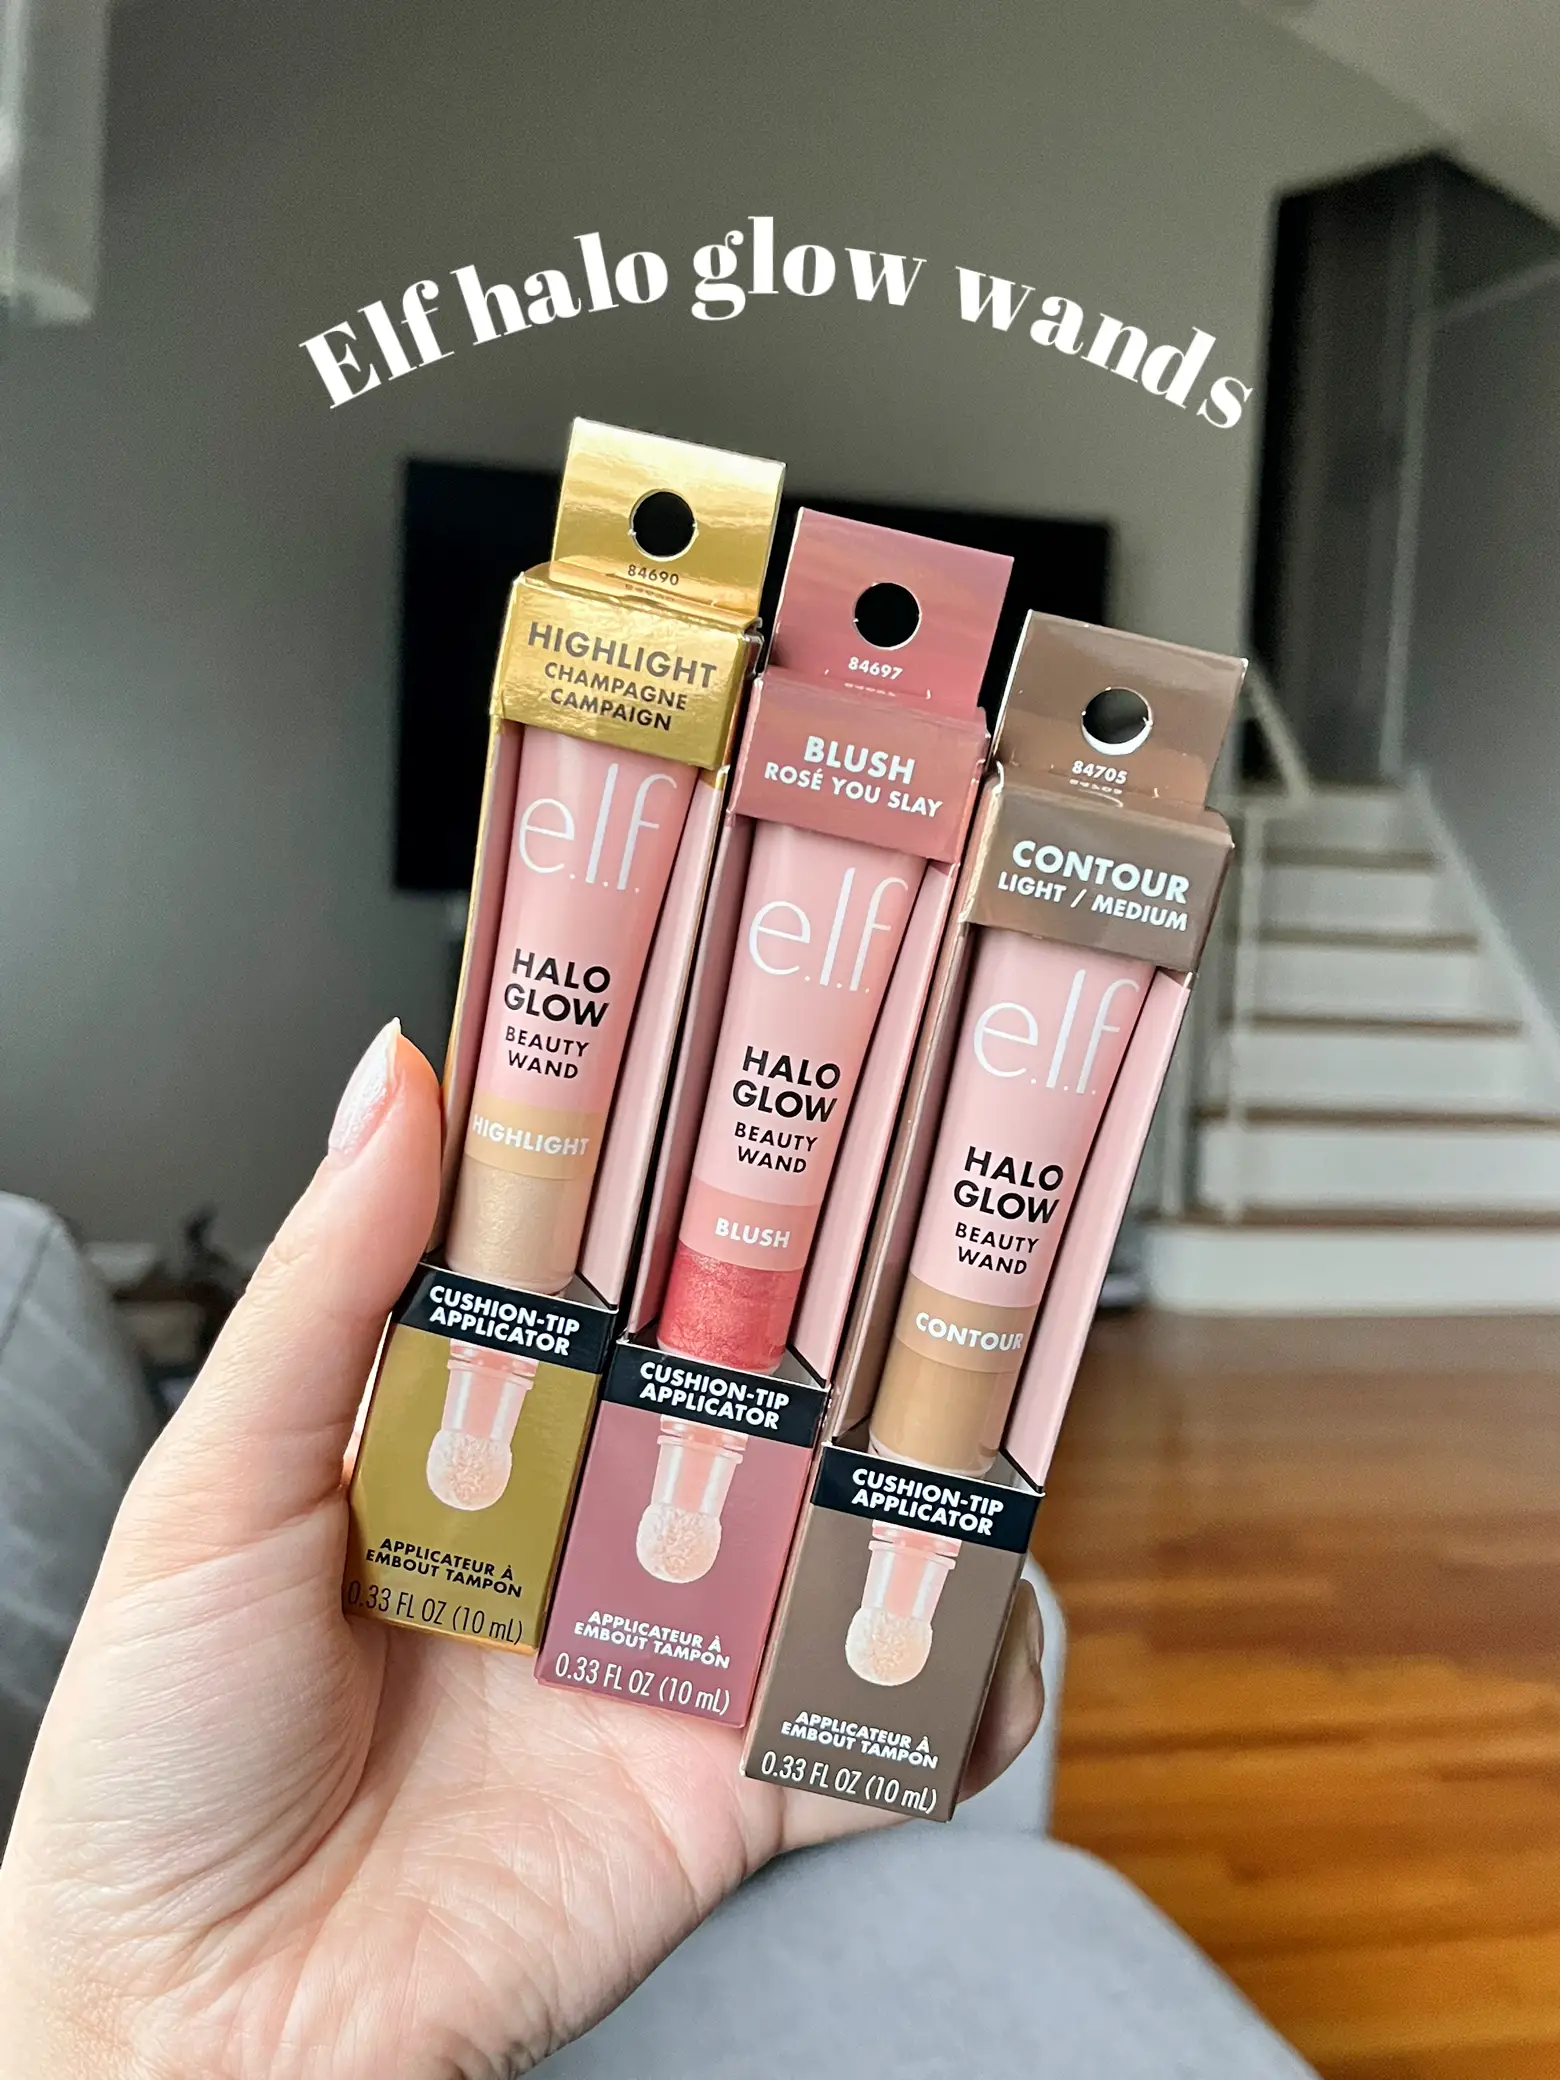 Elf Cosmetics Halo Glow Blush Beauty Wand E.L.F. New in the Box